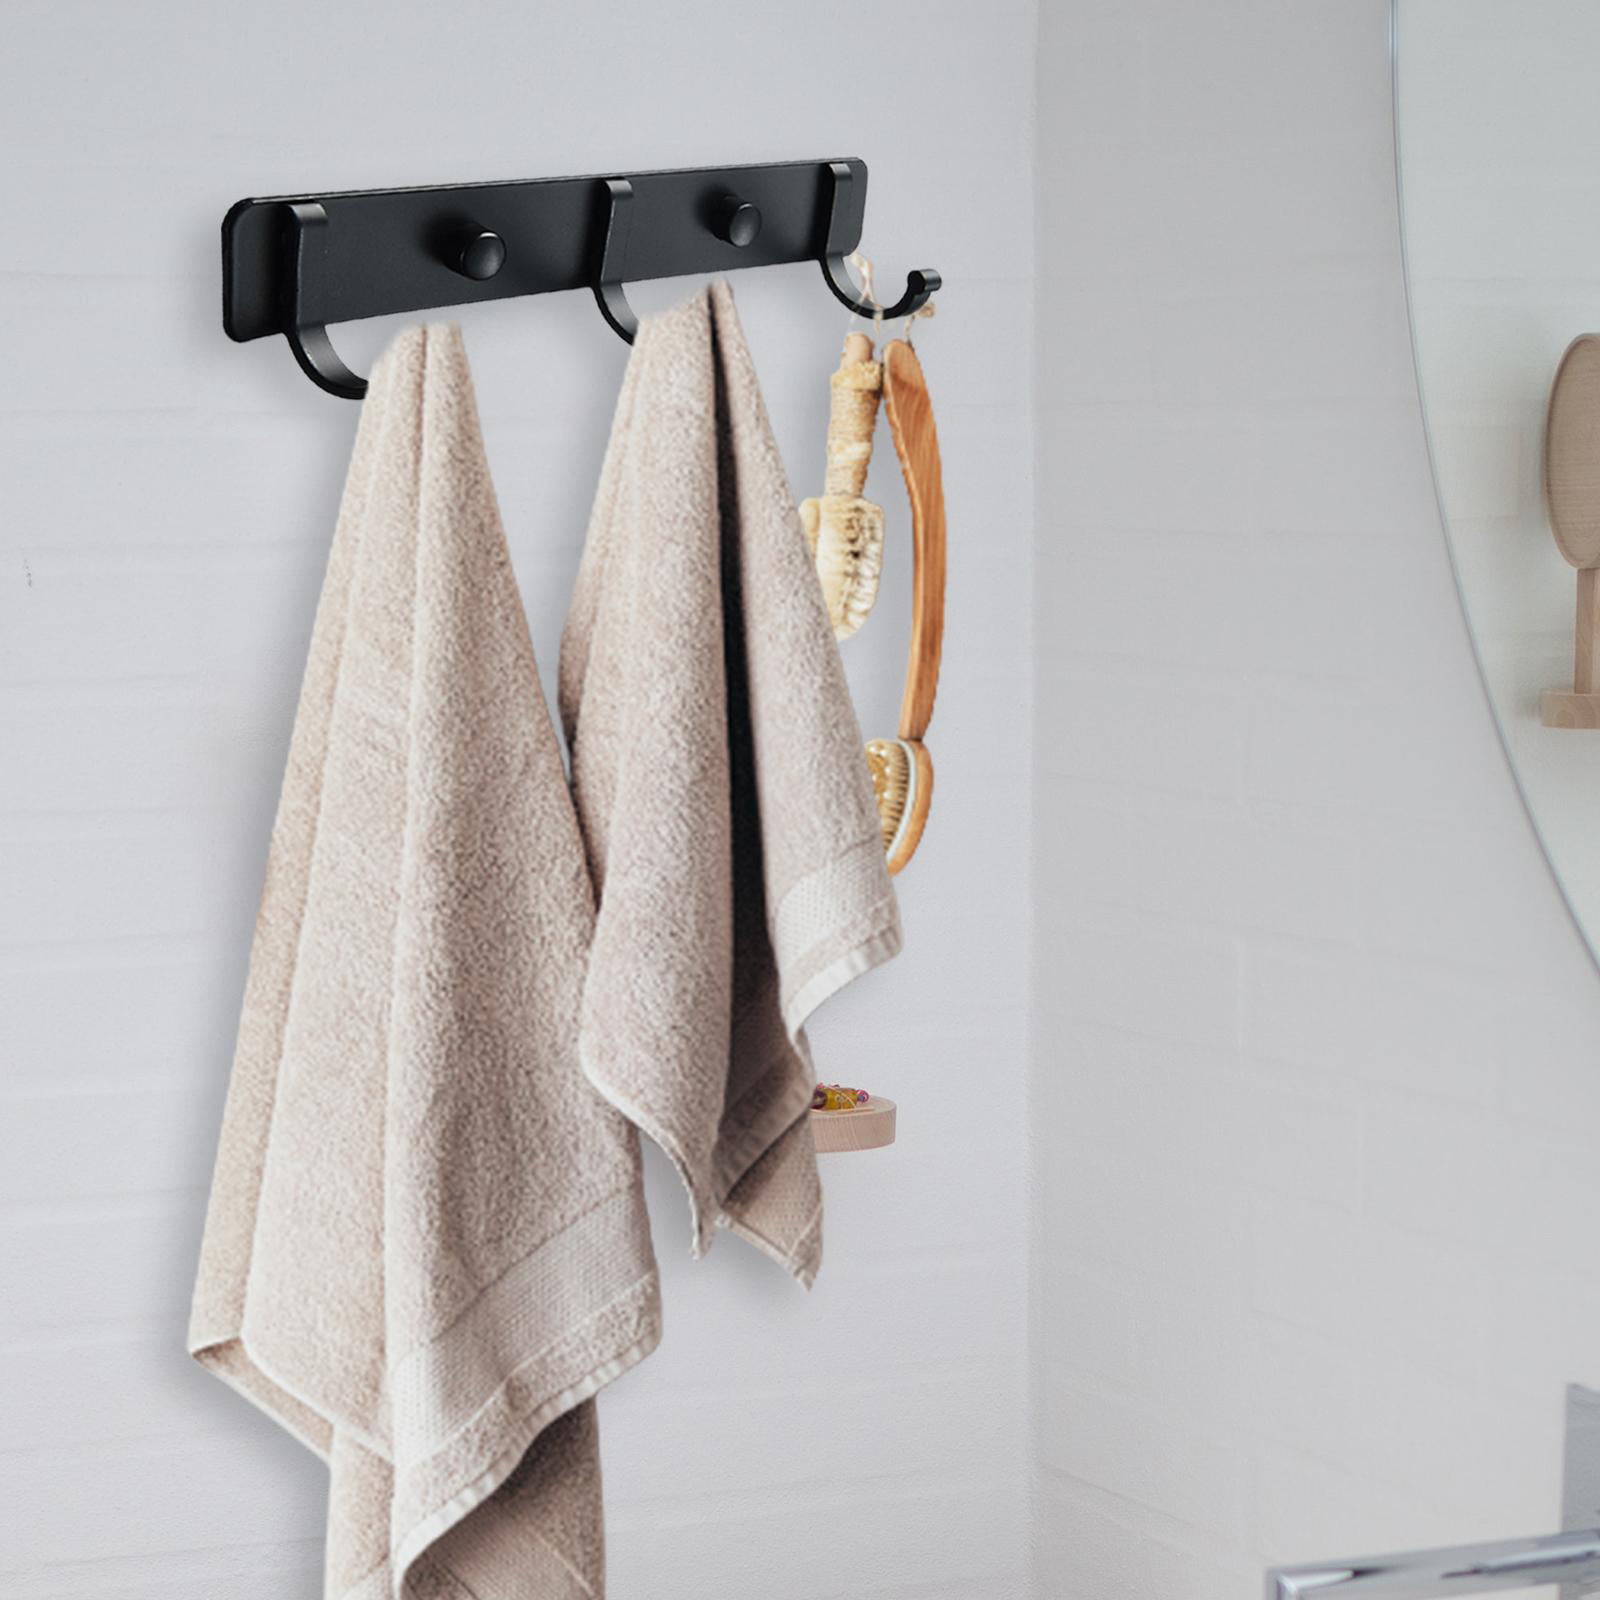 Wall Bathroom Towel Hooks Coat rack Mounted for Purse Jewelry